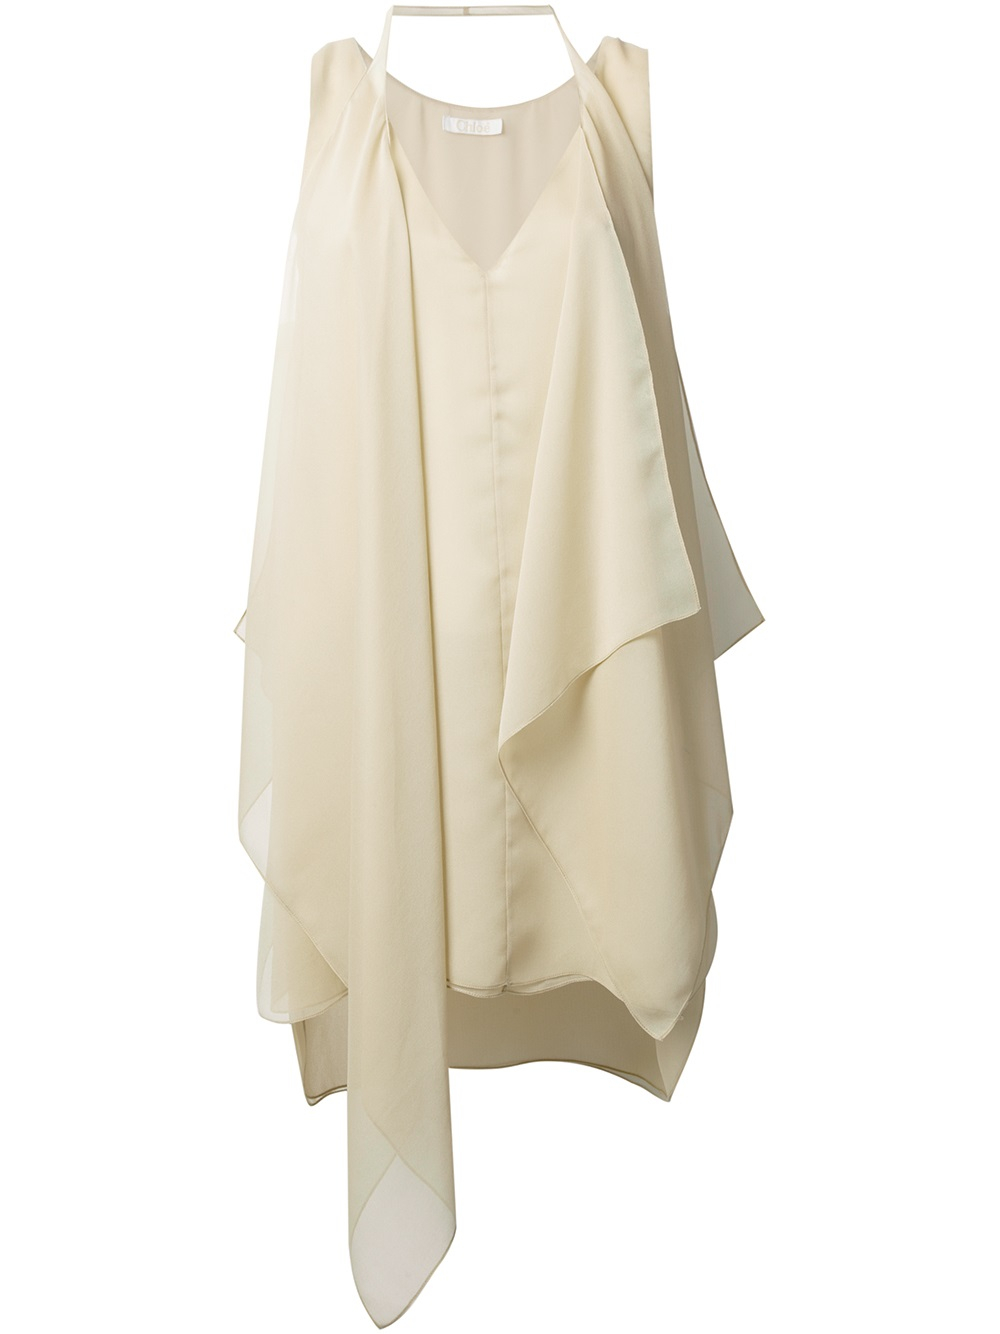 Lyst - Chloé Sleeveless Draped Top in White